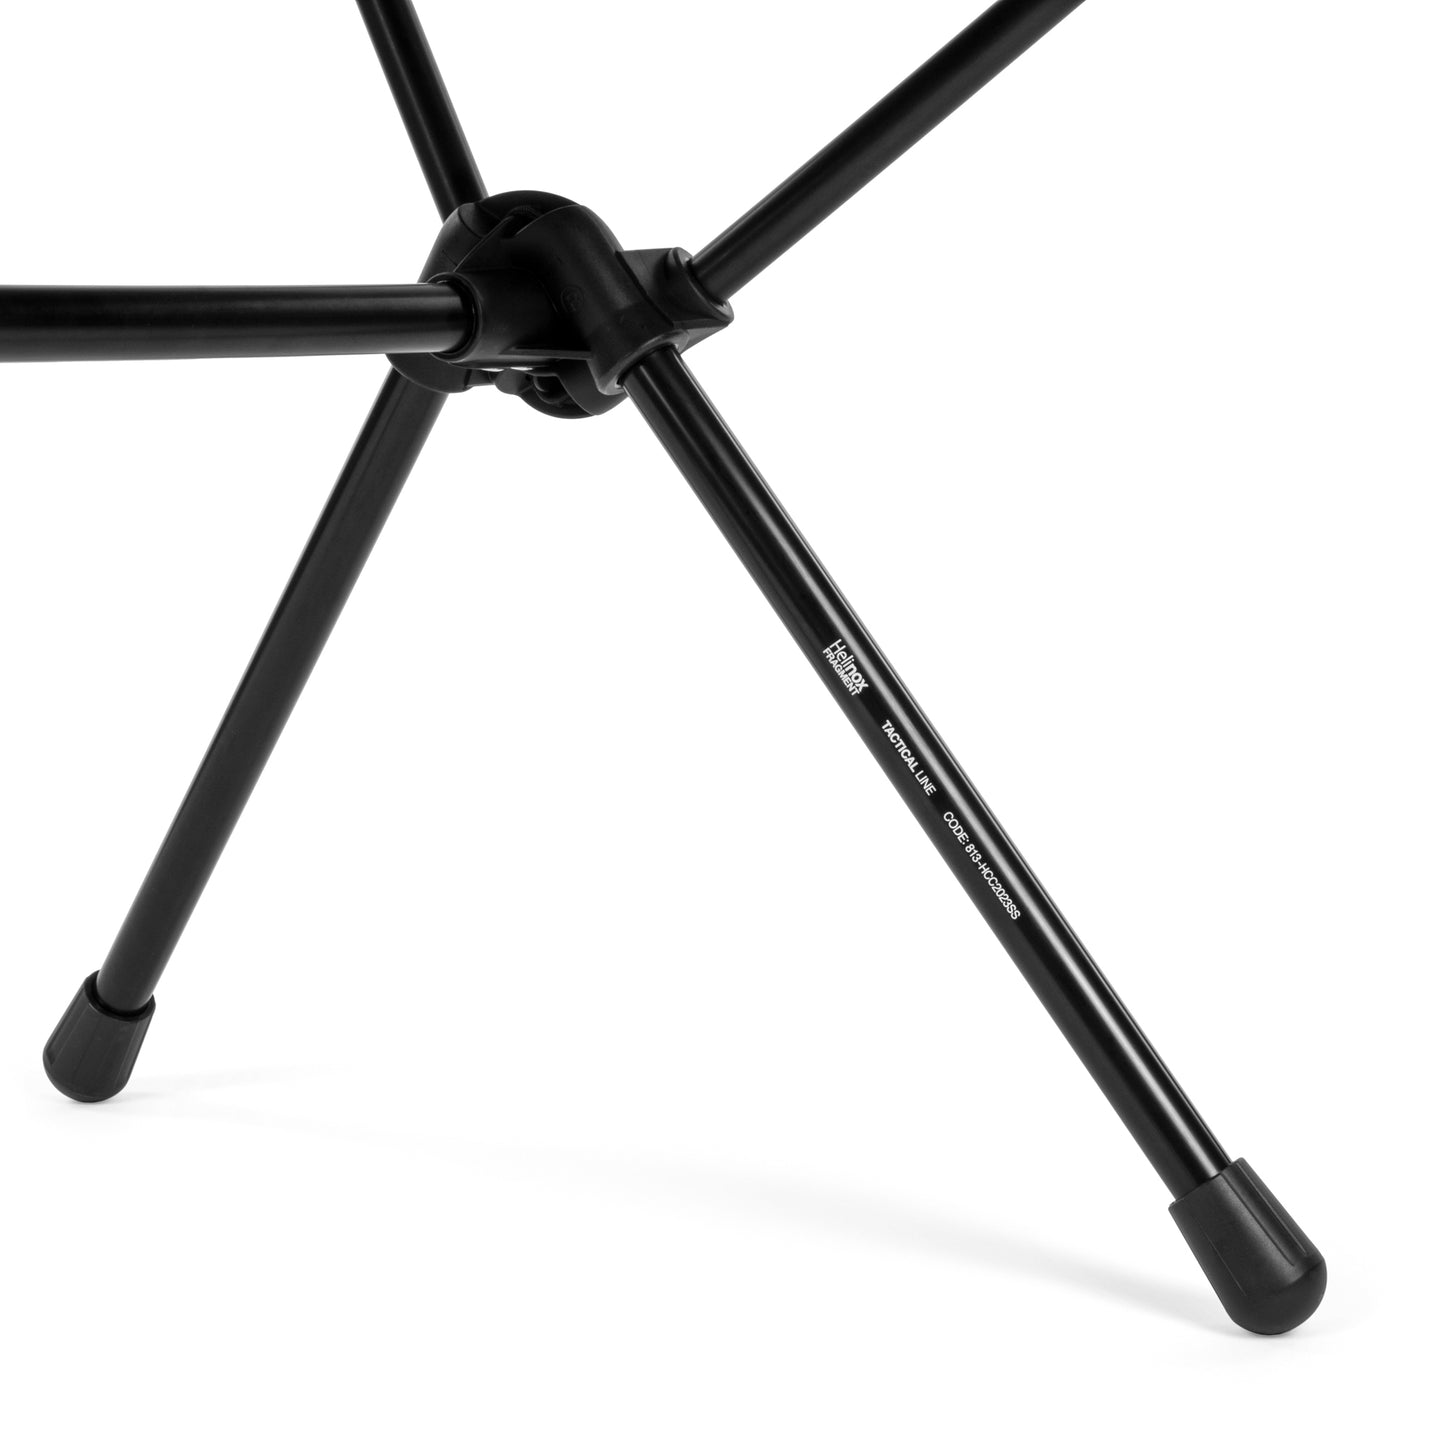 FRGMT x Helinox Tac.Sunset Chair - Black